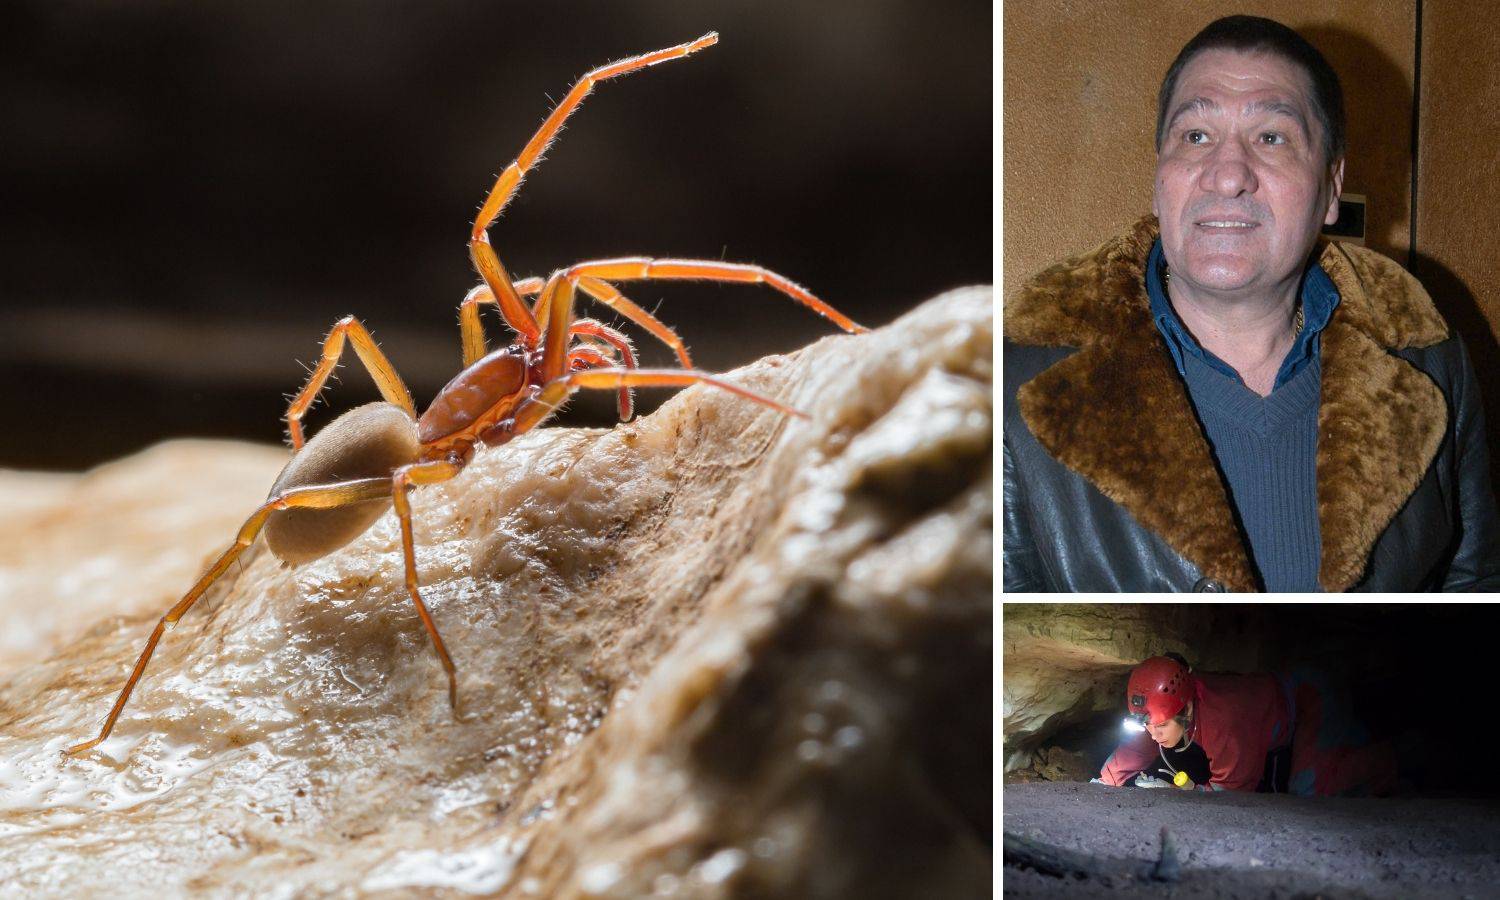 Španjolci htjeli da se misteriozni pauk iz podzemlja Biokova zove Popaj. Ali on je - Mate Parlov!